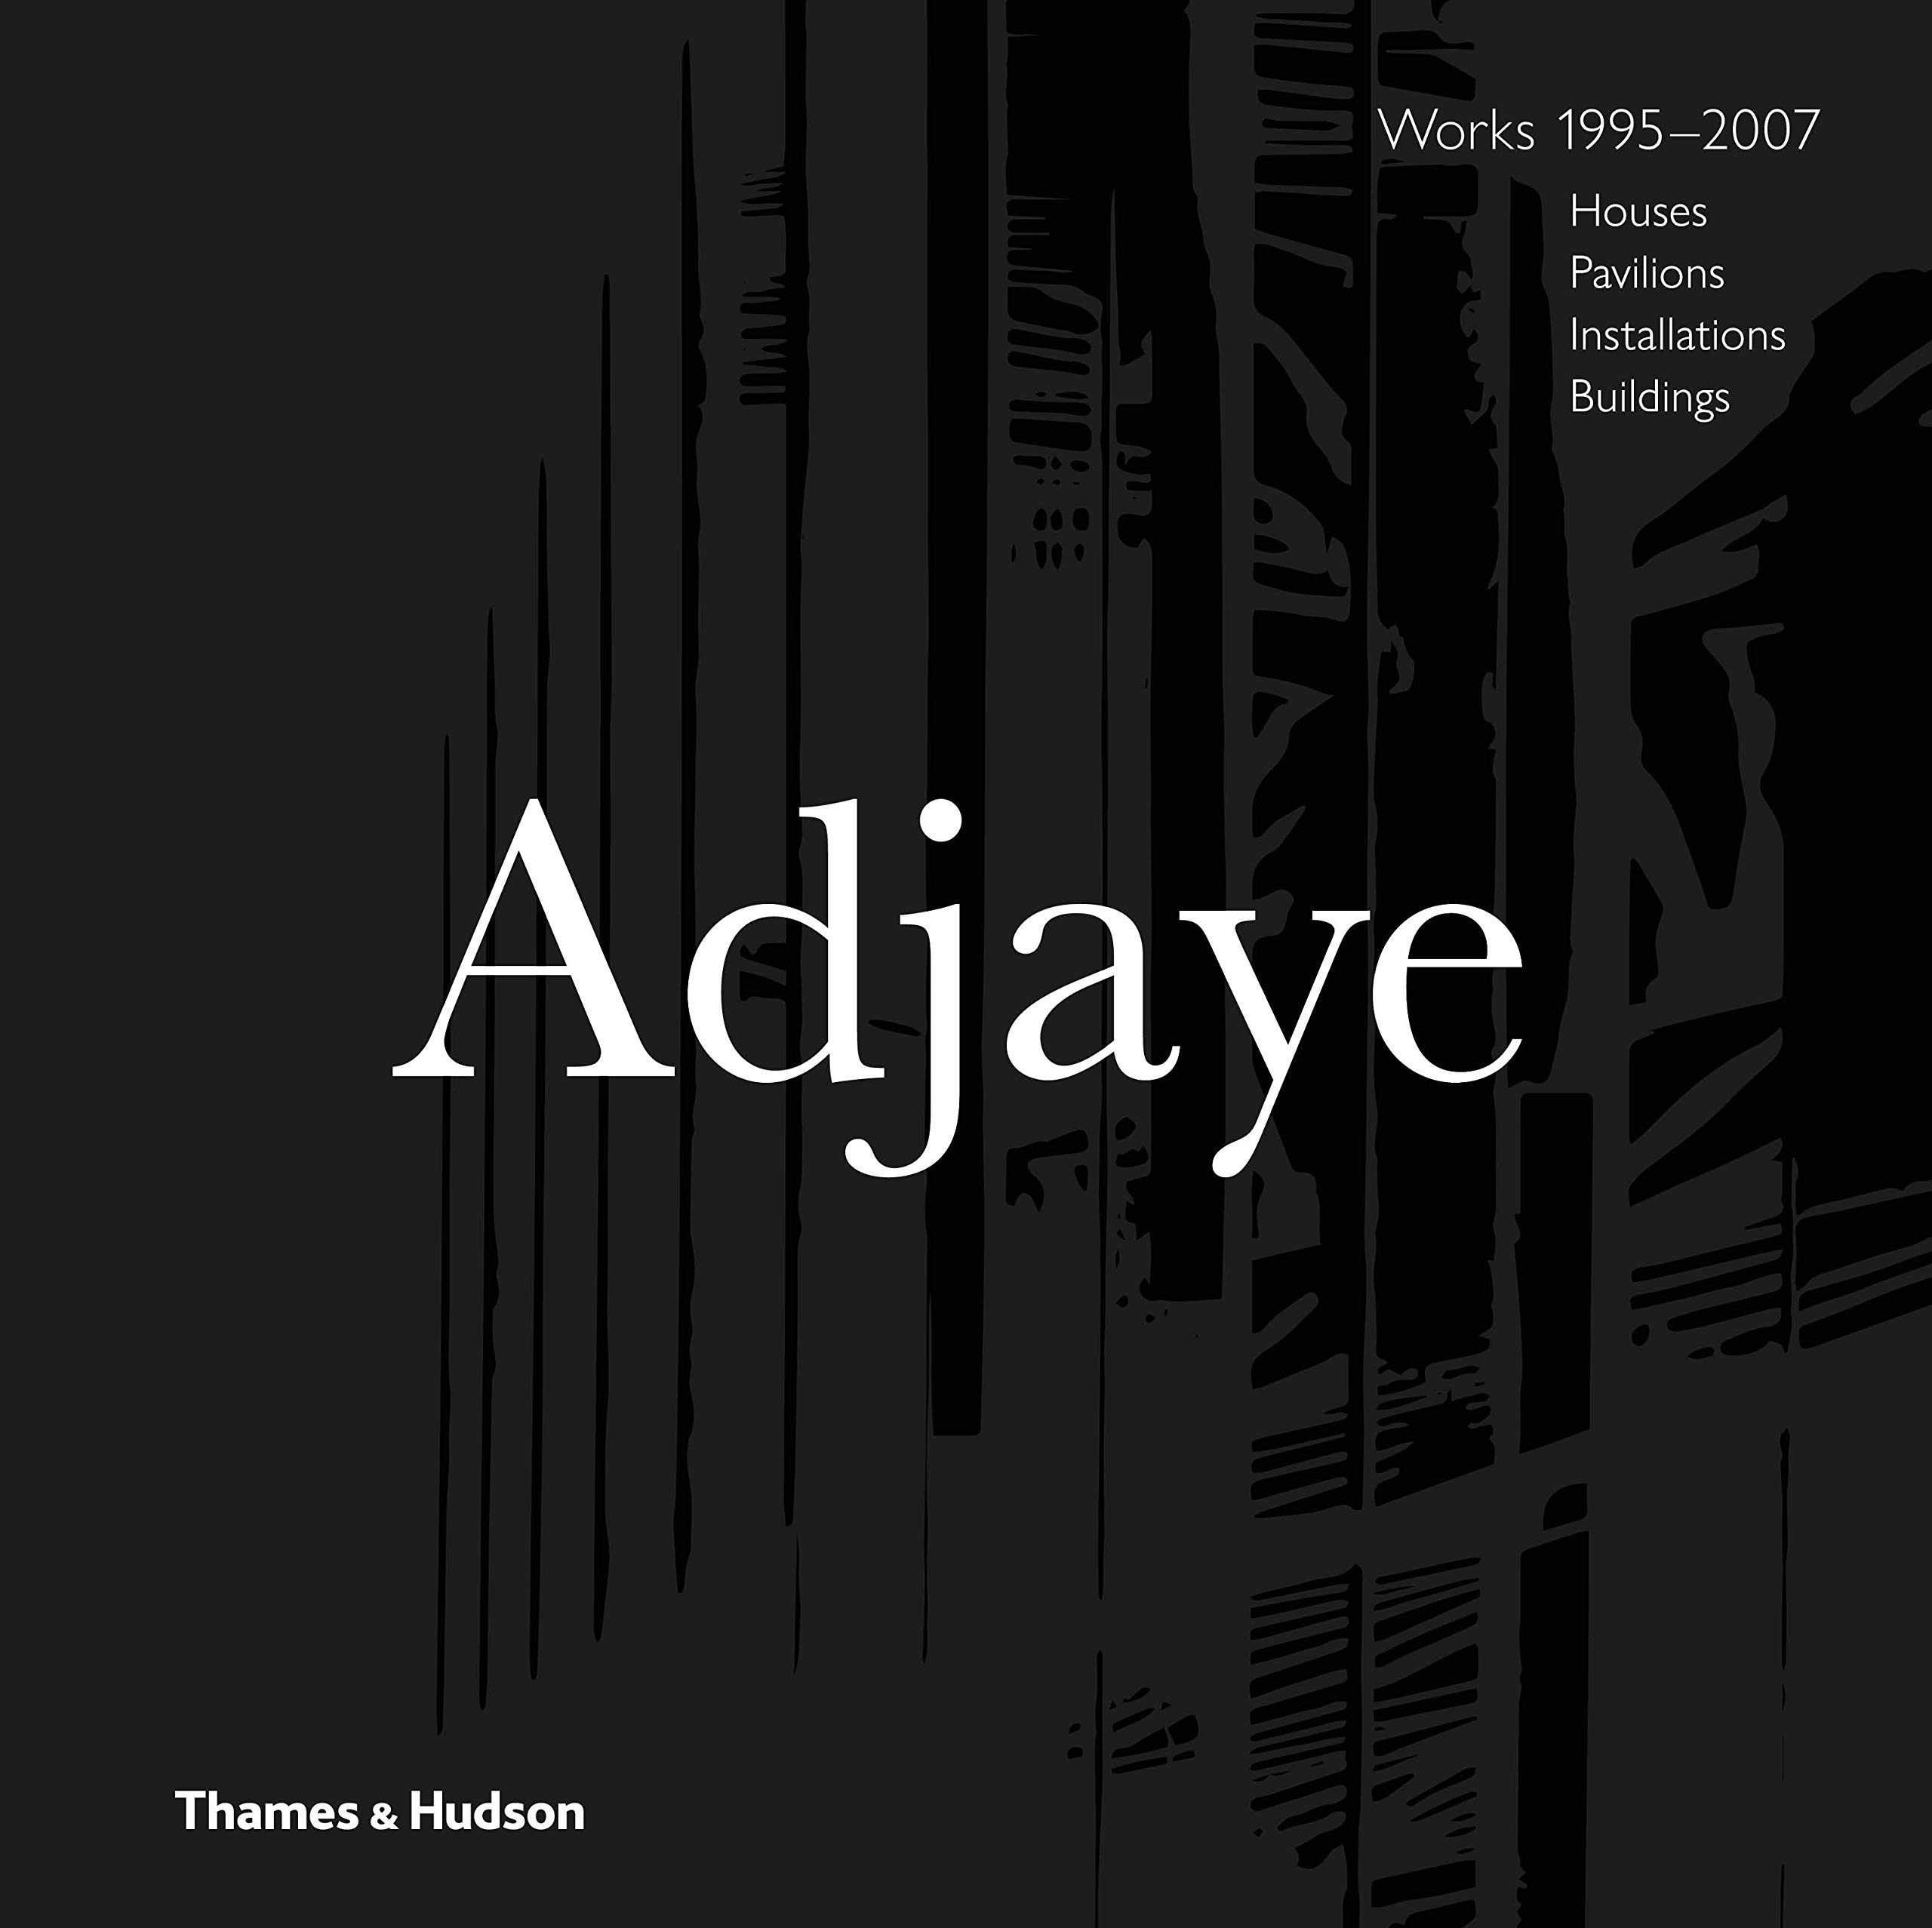 Adjaye - Works: Houses, Pavilions, Installations, Buildings, 1995-2007